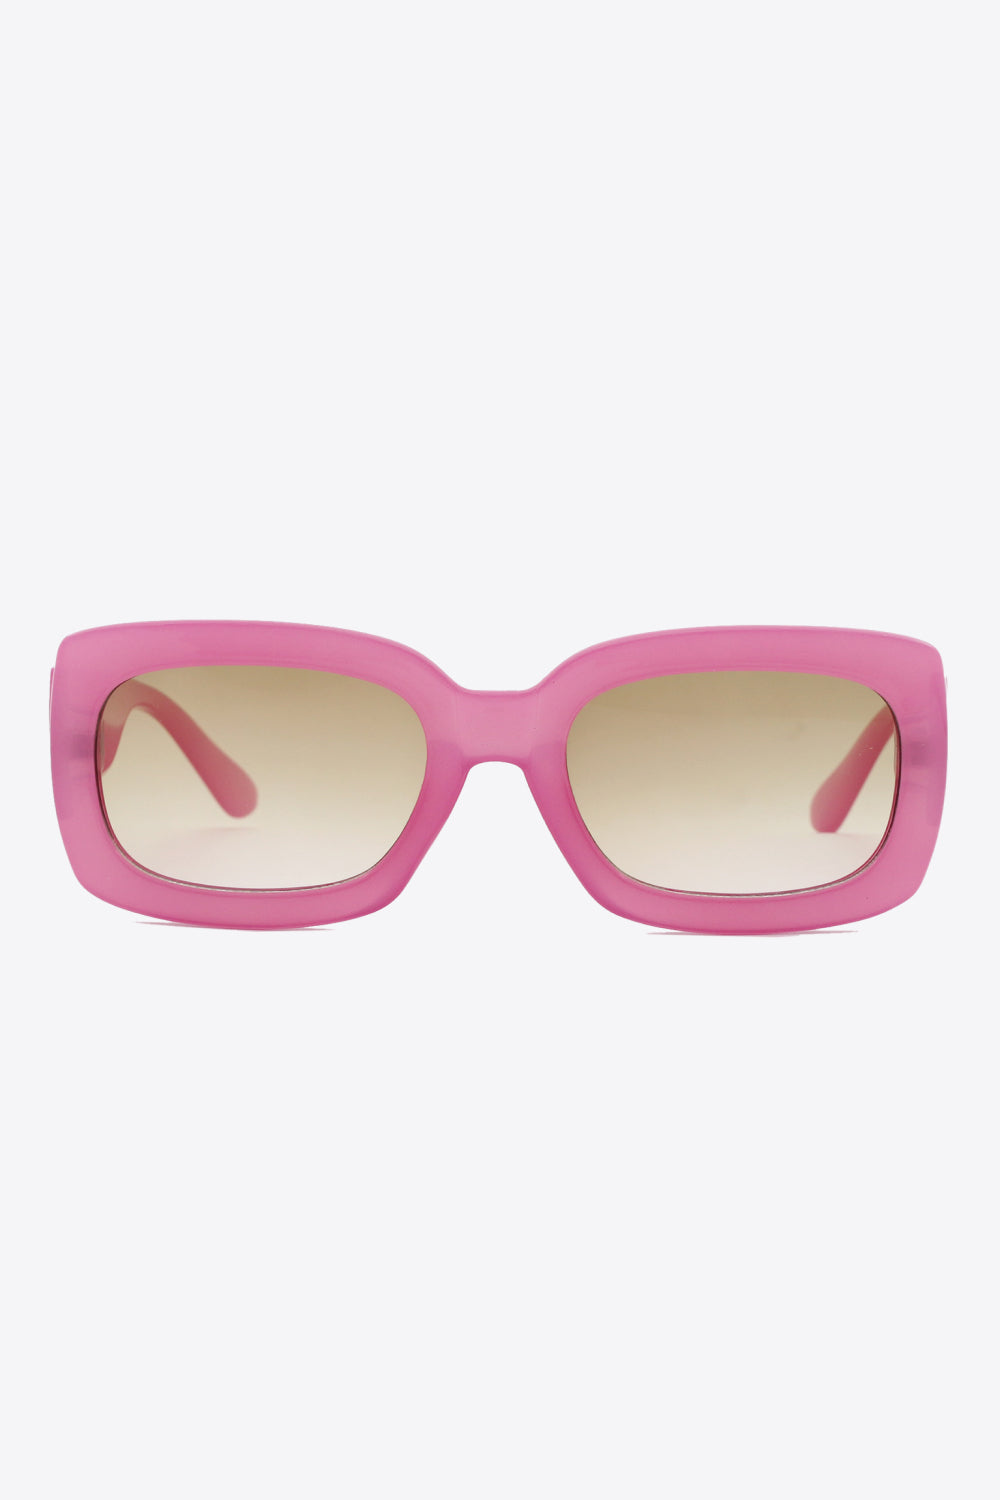 Villa Blvd Angle Rectangle Sunglasses ? Multiple Colors Available ?